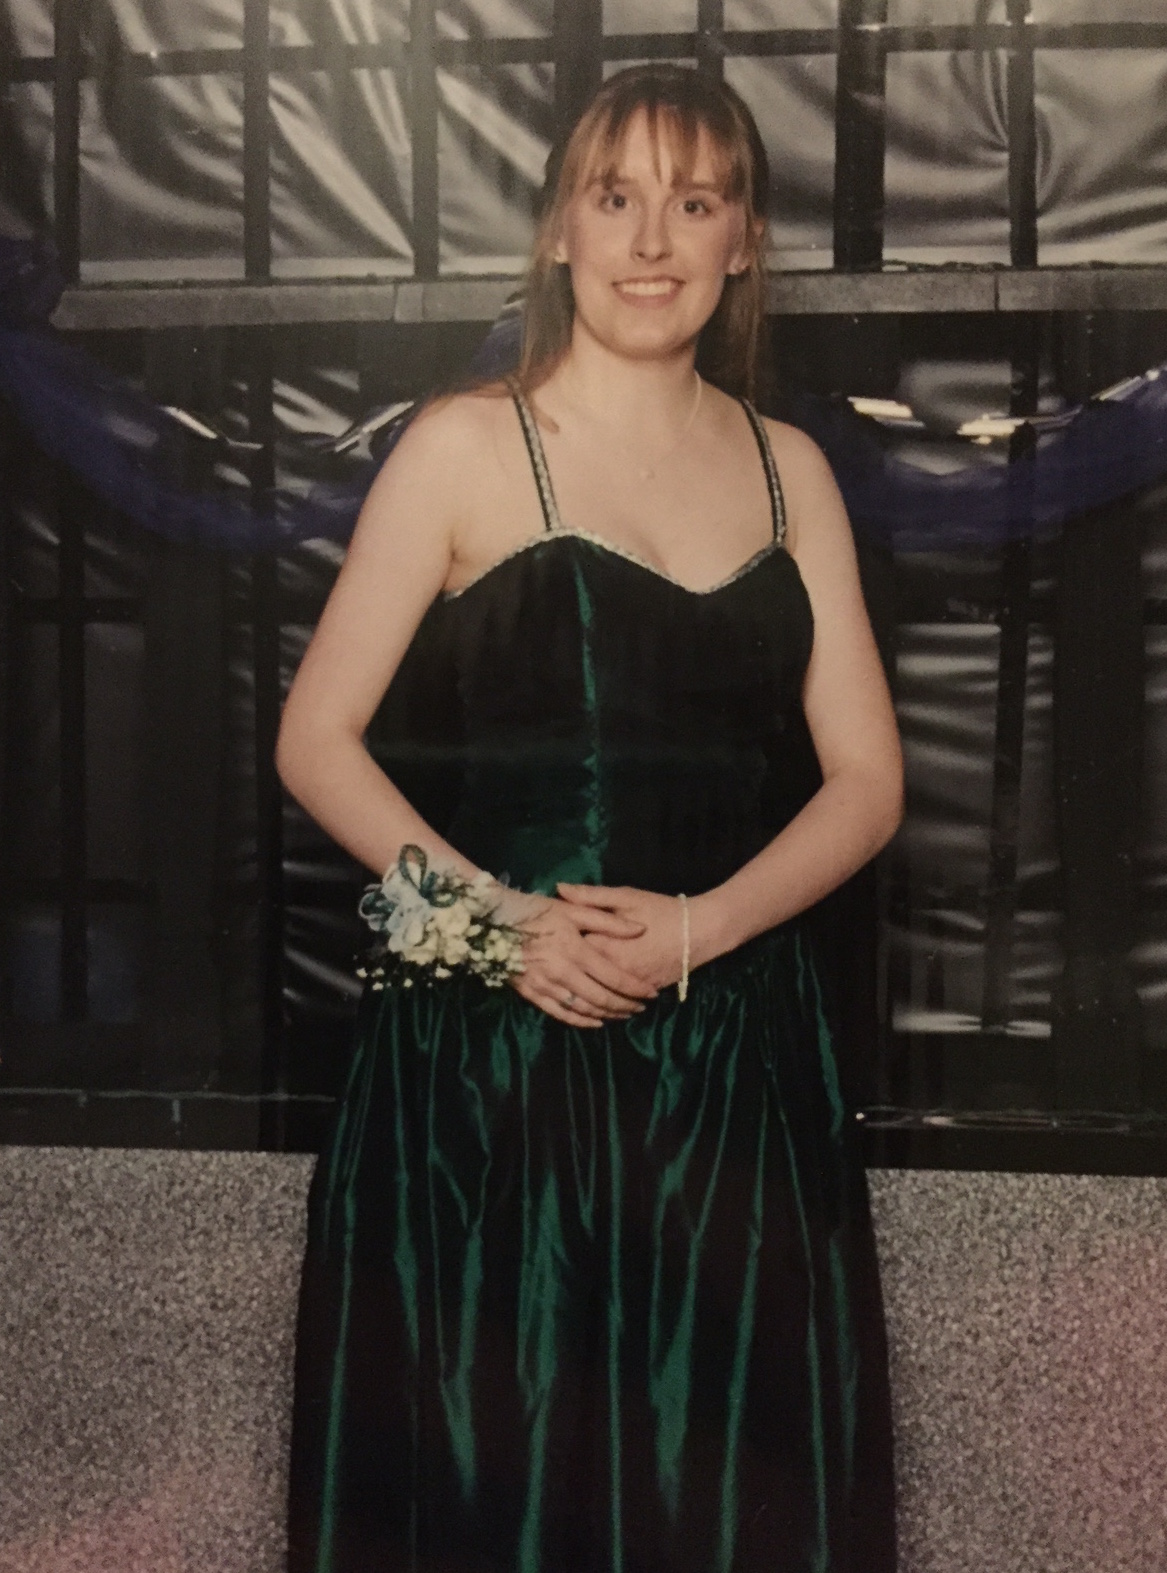 Brandi-Senior prom